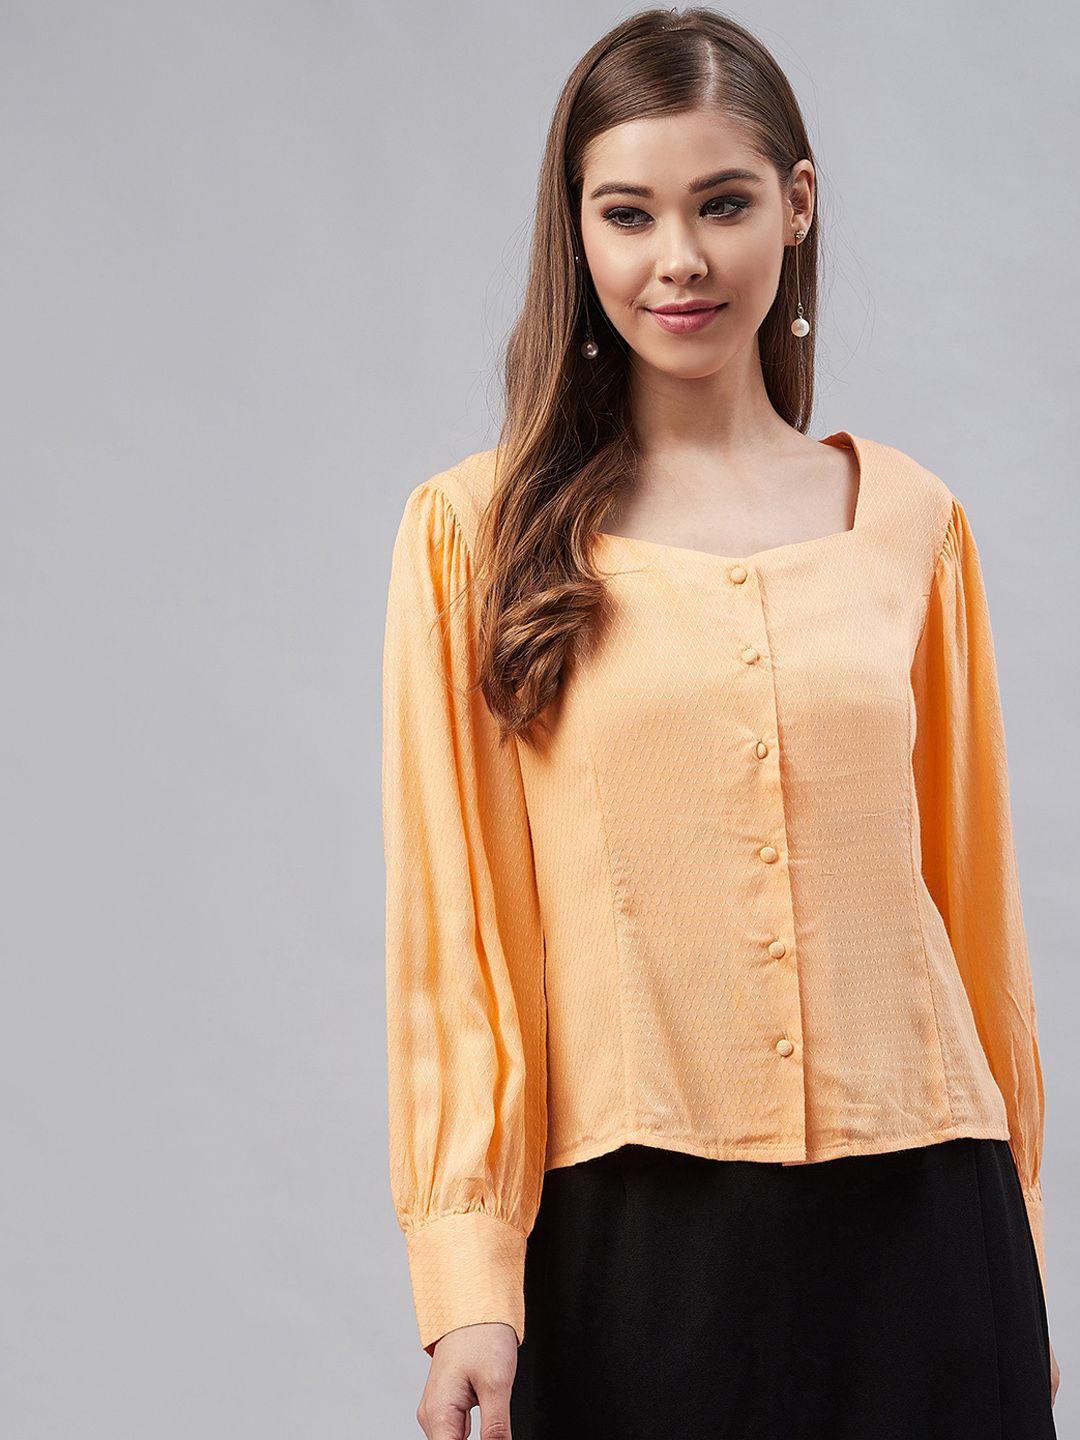 marie claire women orange comfort regular fit self design casual shirt